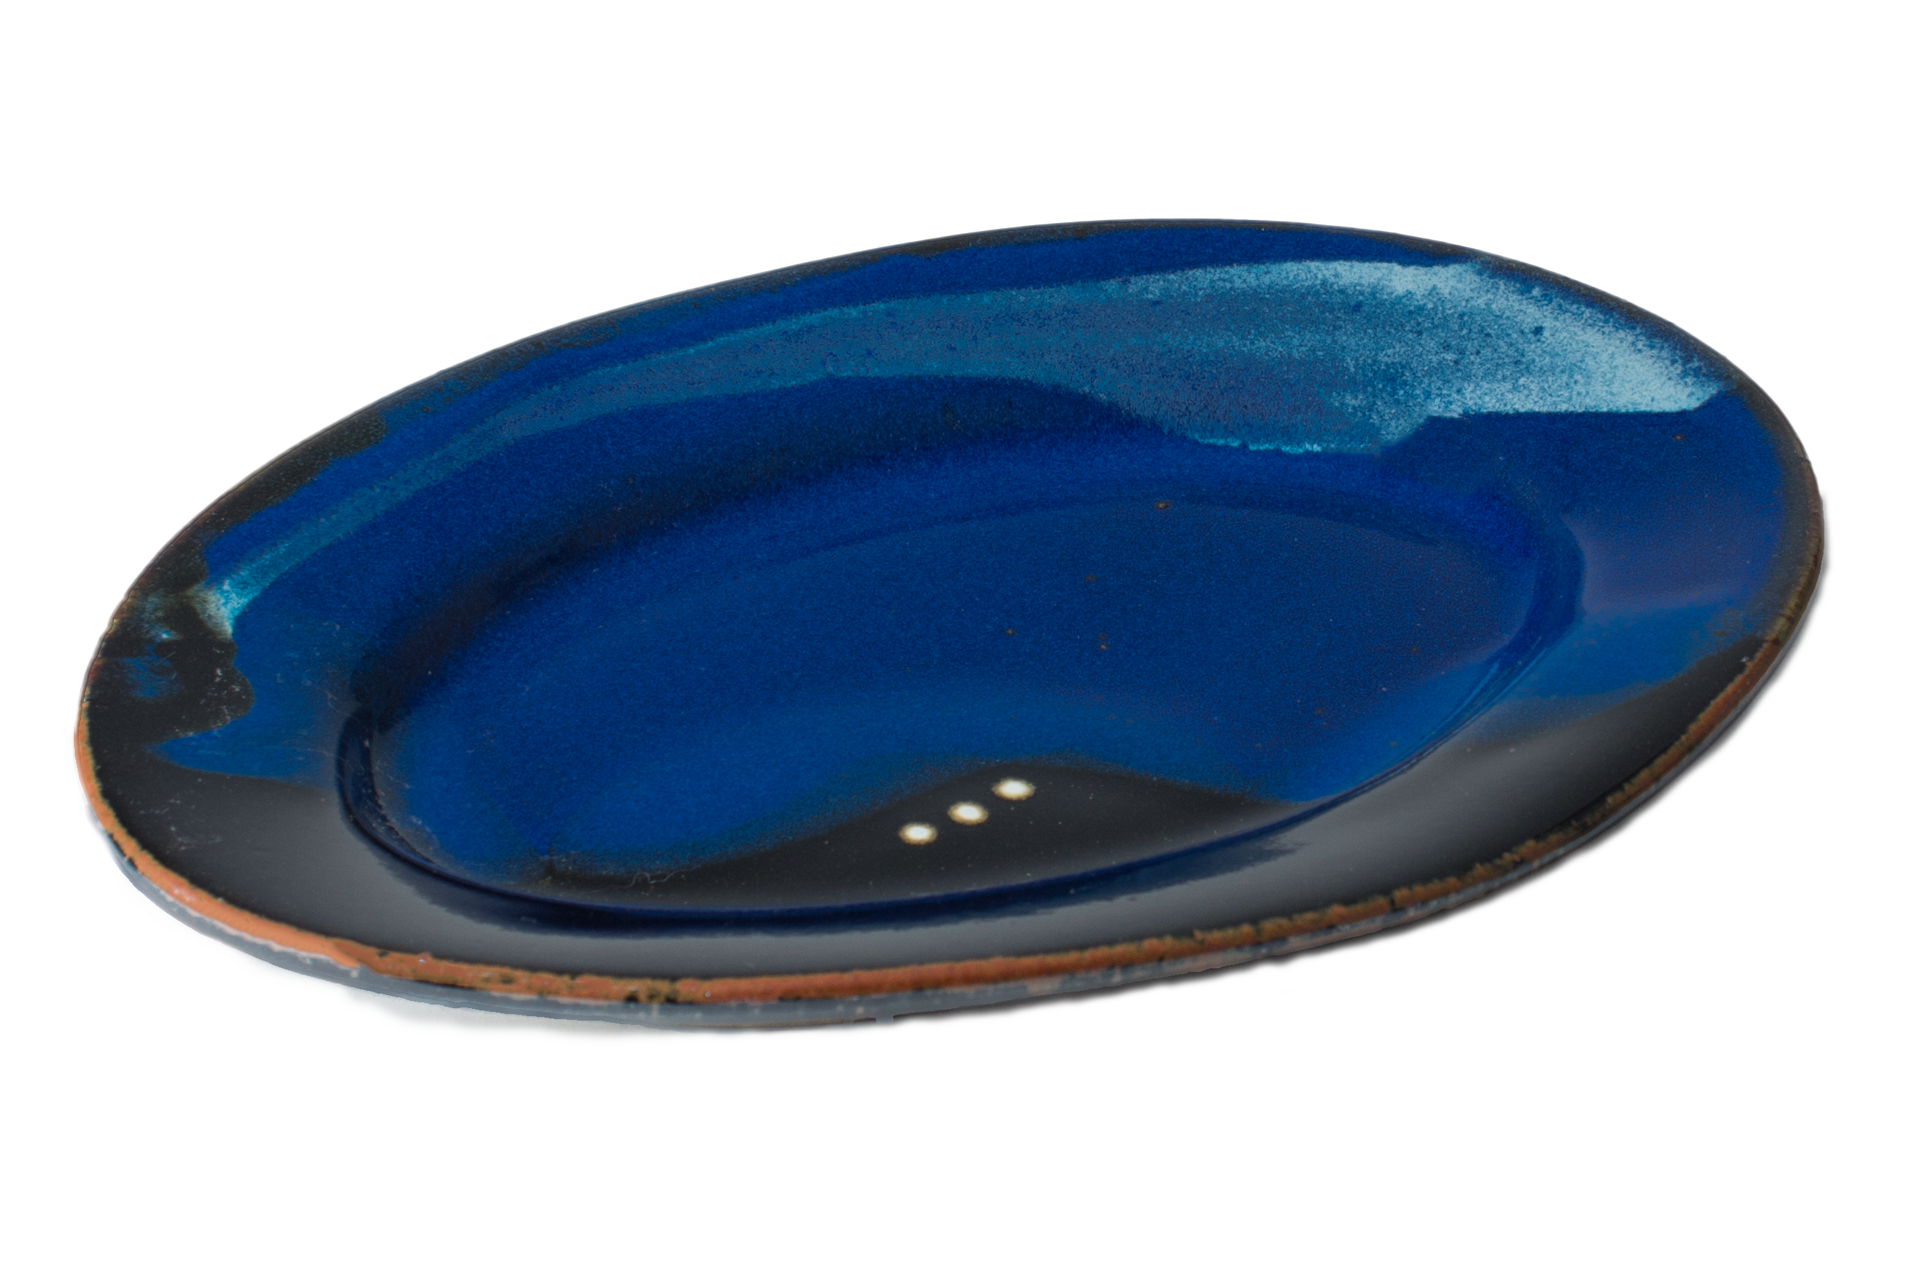 Dish clipart blue plate. Handmade pottery oval overhead